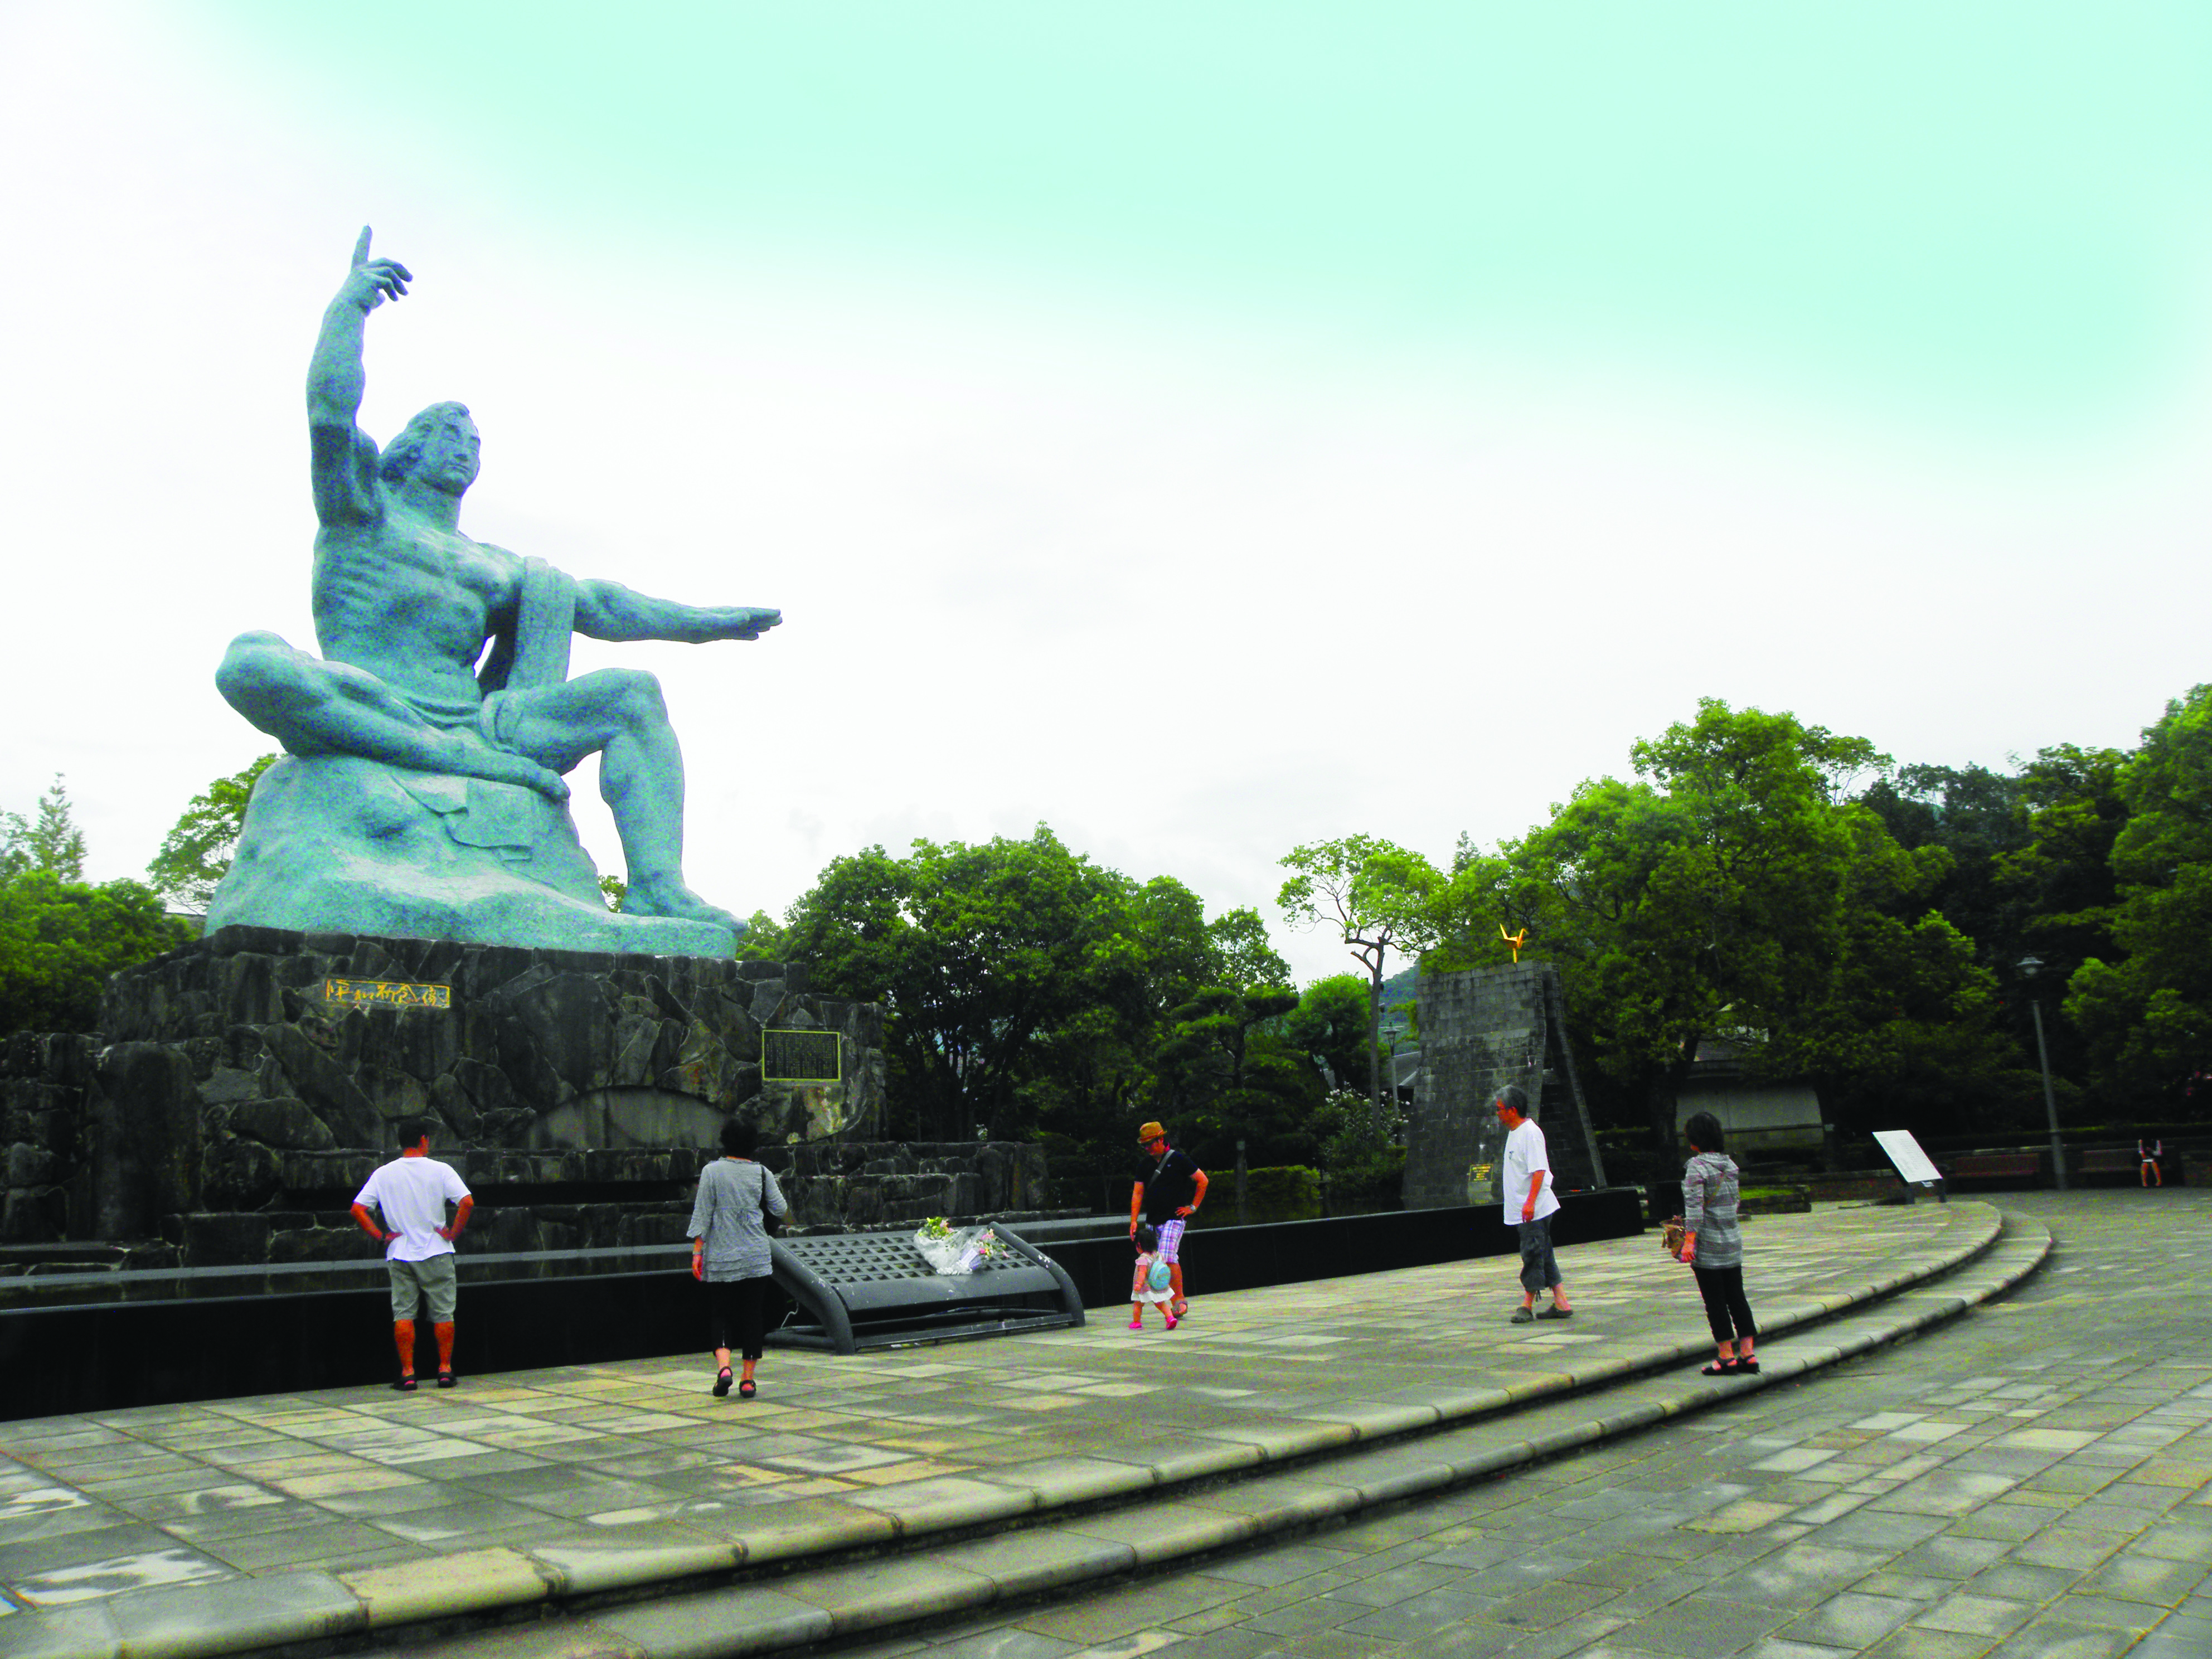 71 Years Later: A New Nagasaki